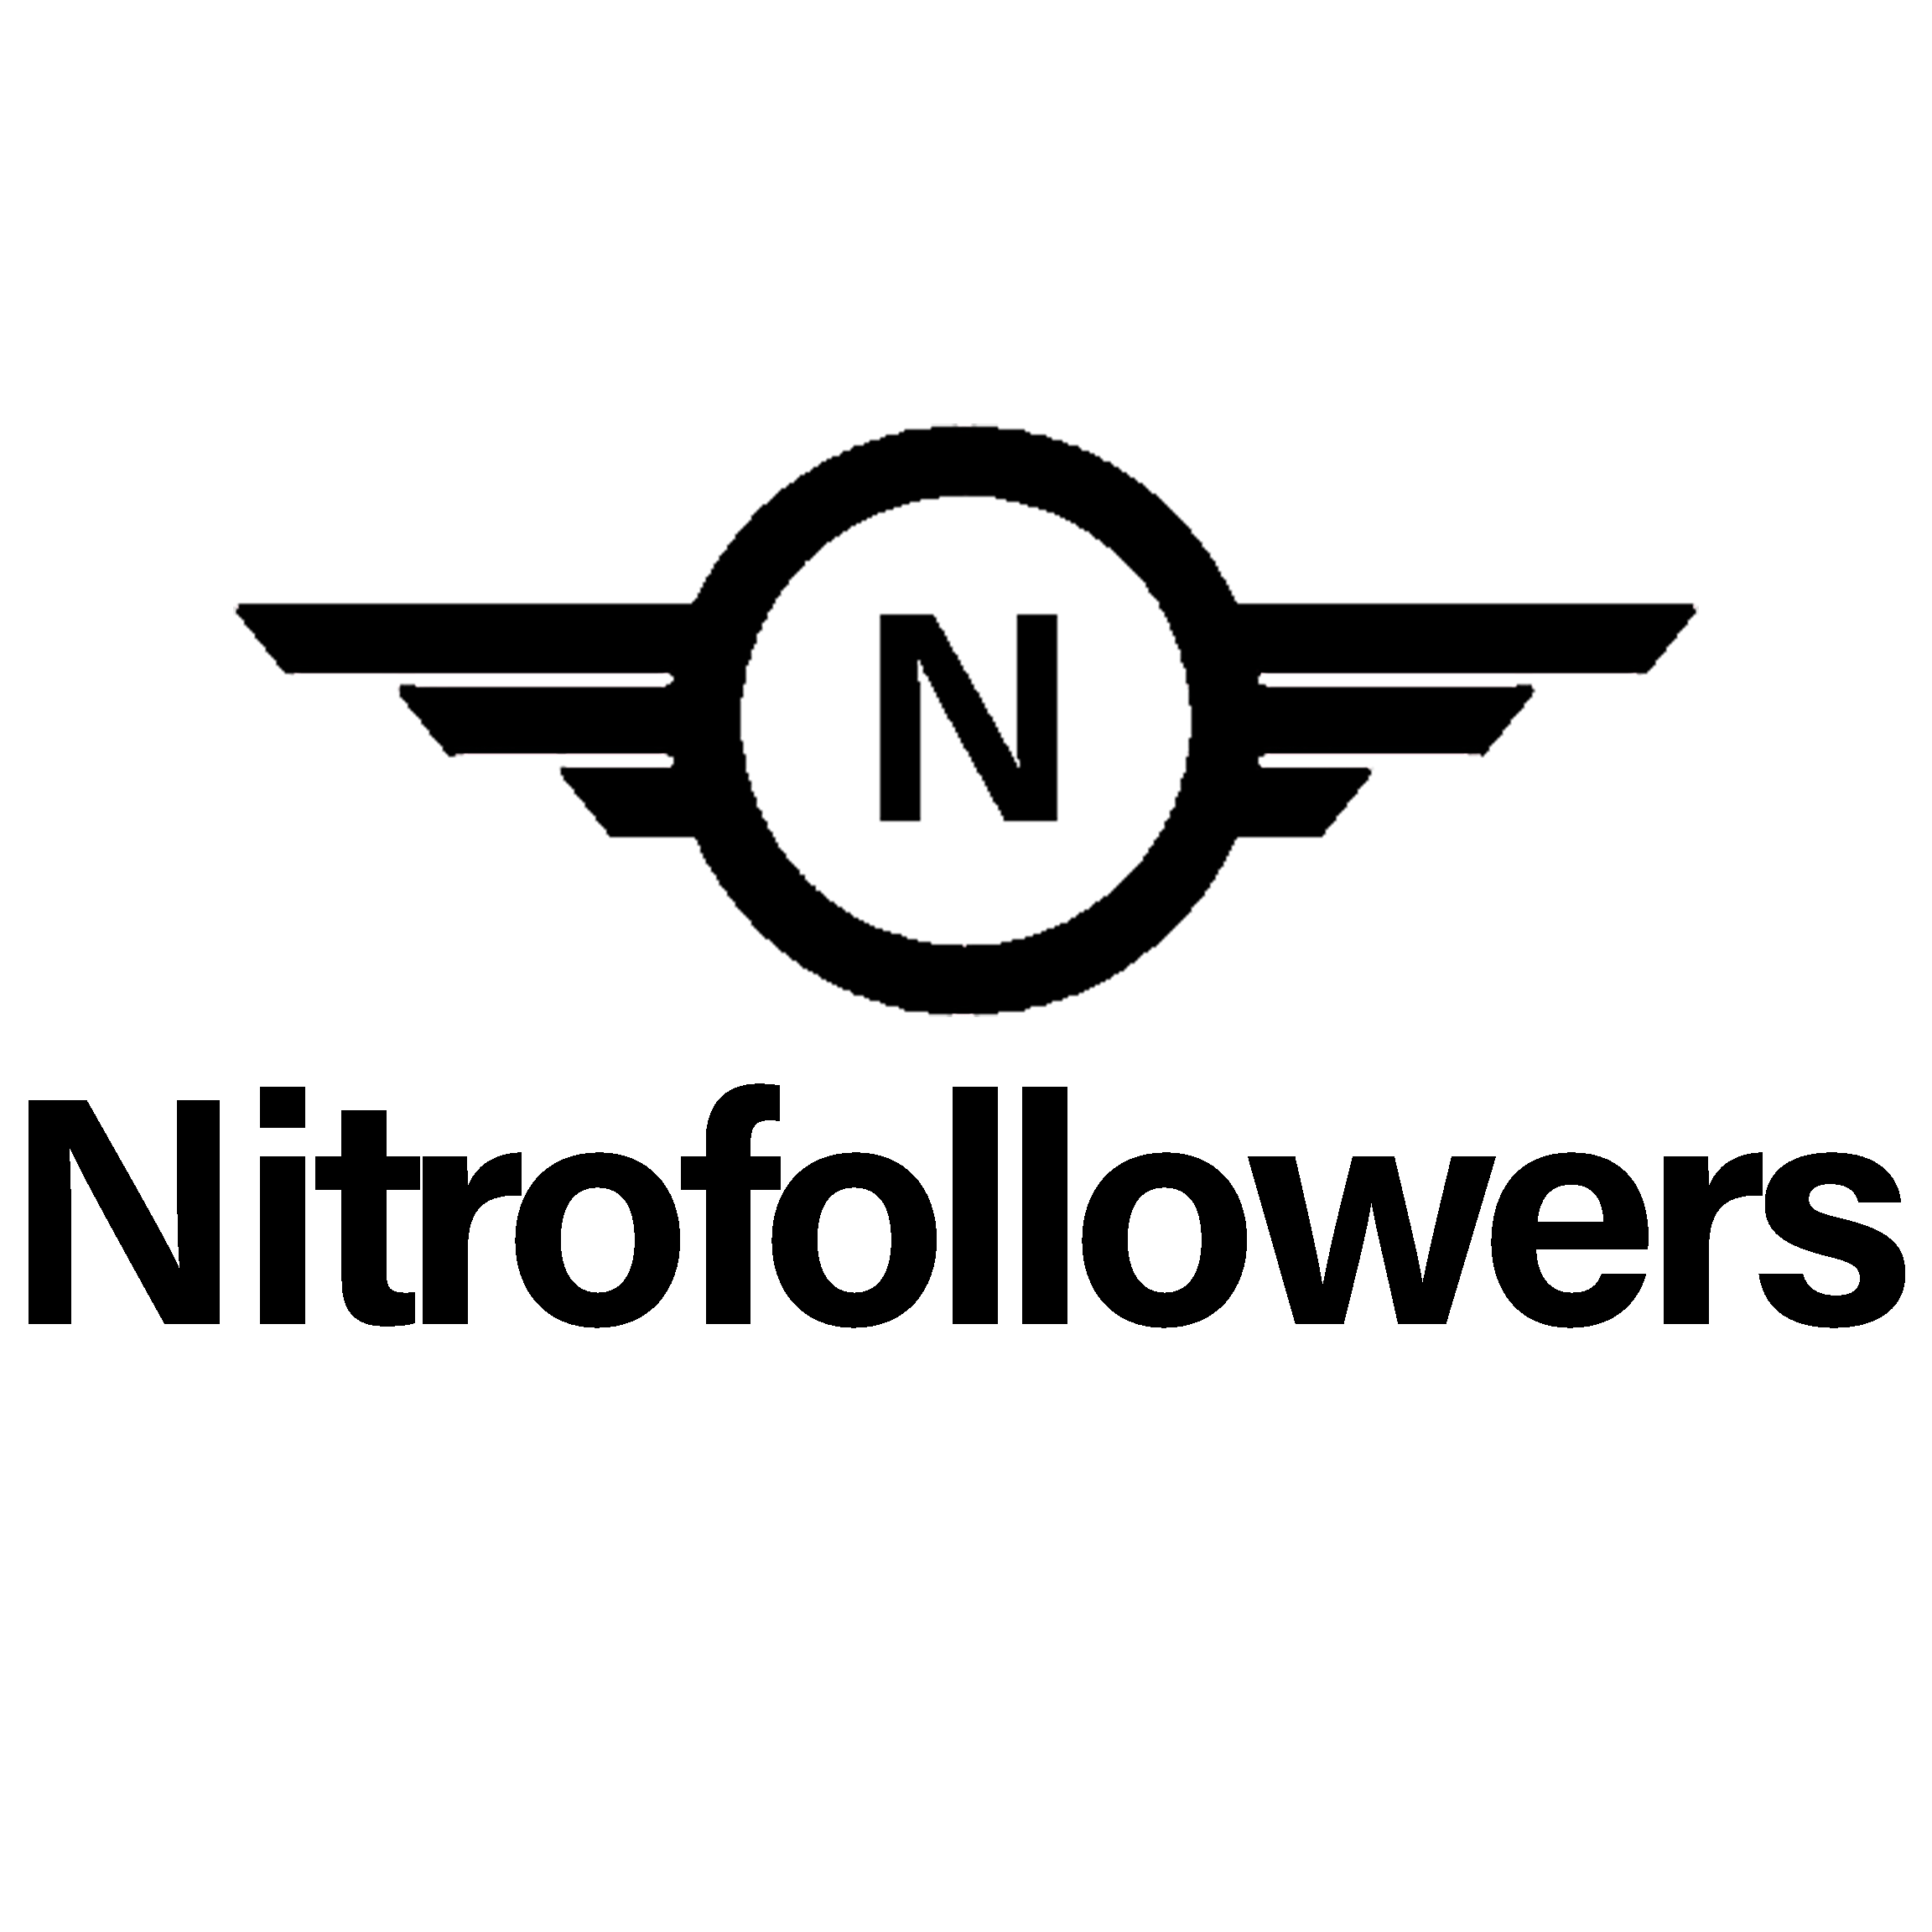 Nitrofollowers